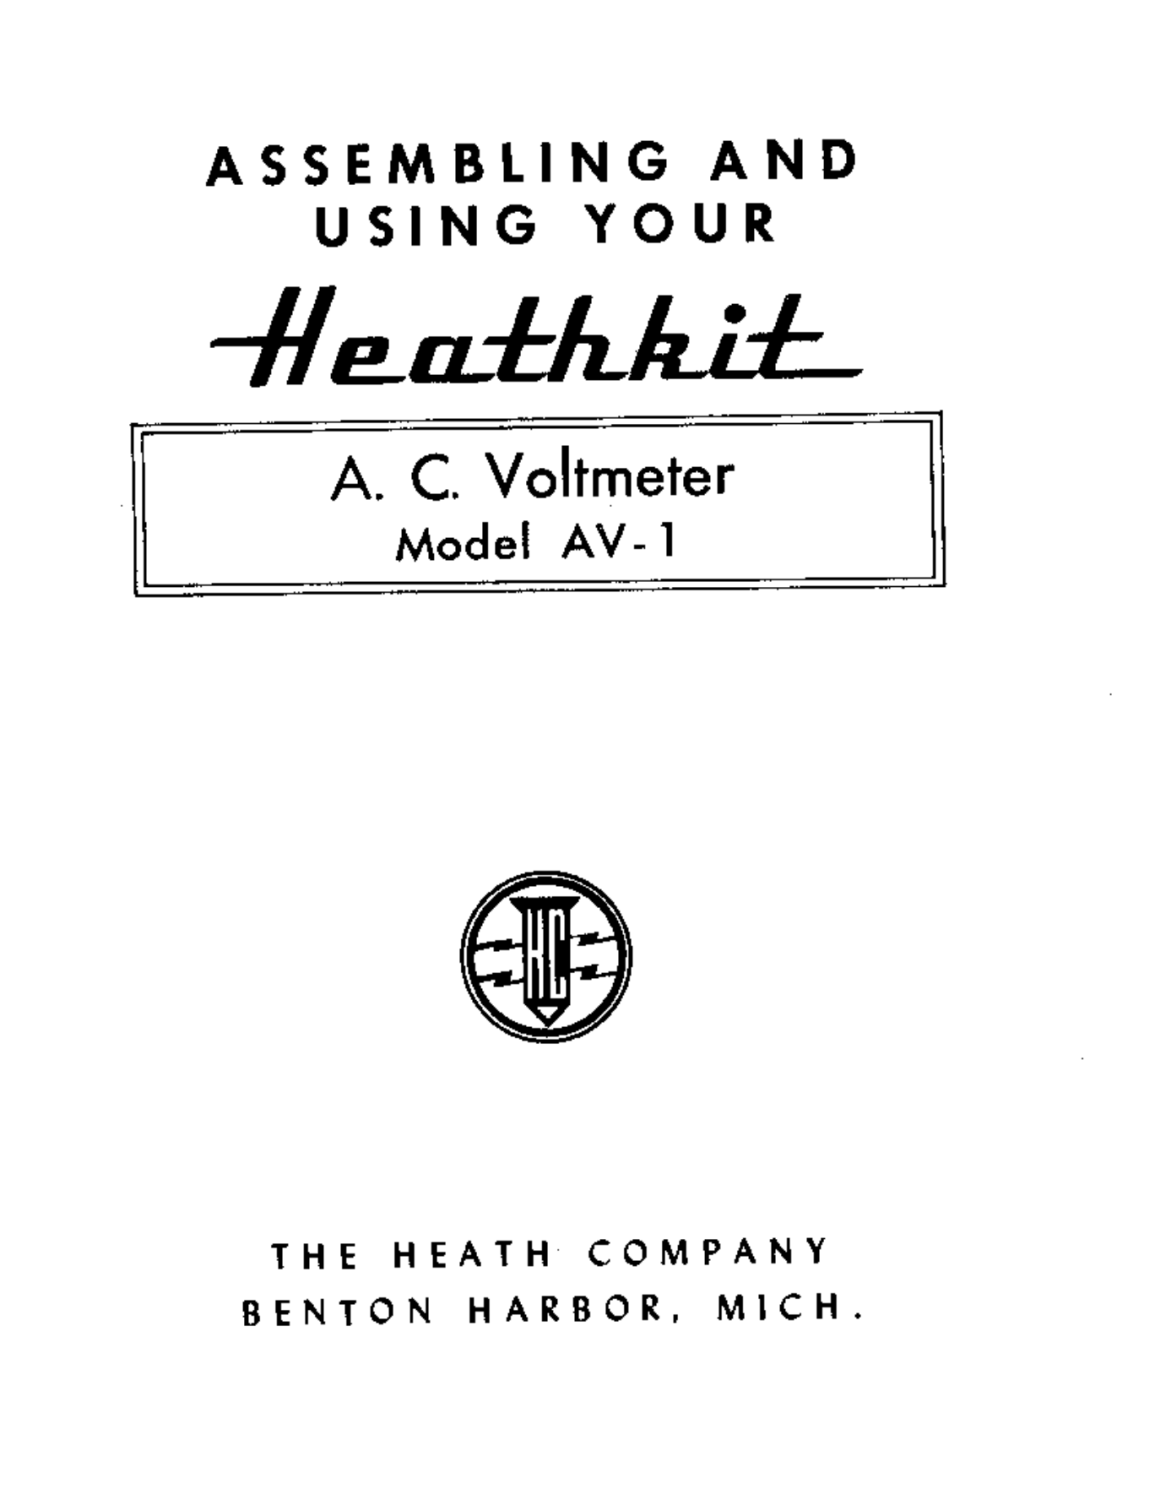 Heathkit AV-1 AC Voltmeter - Assembly Instructions